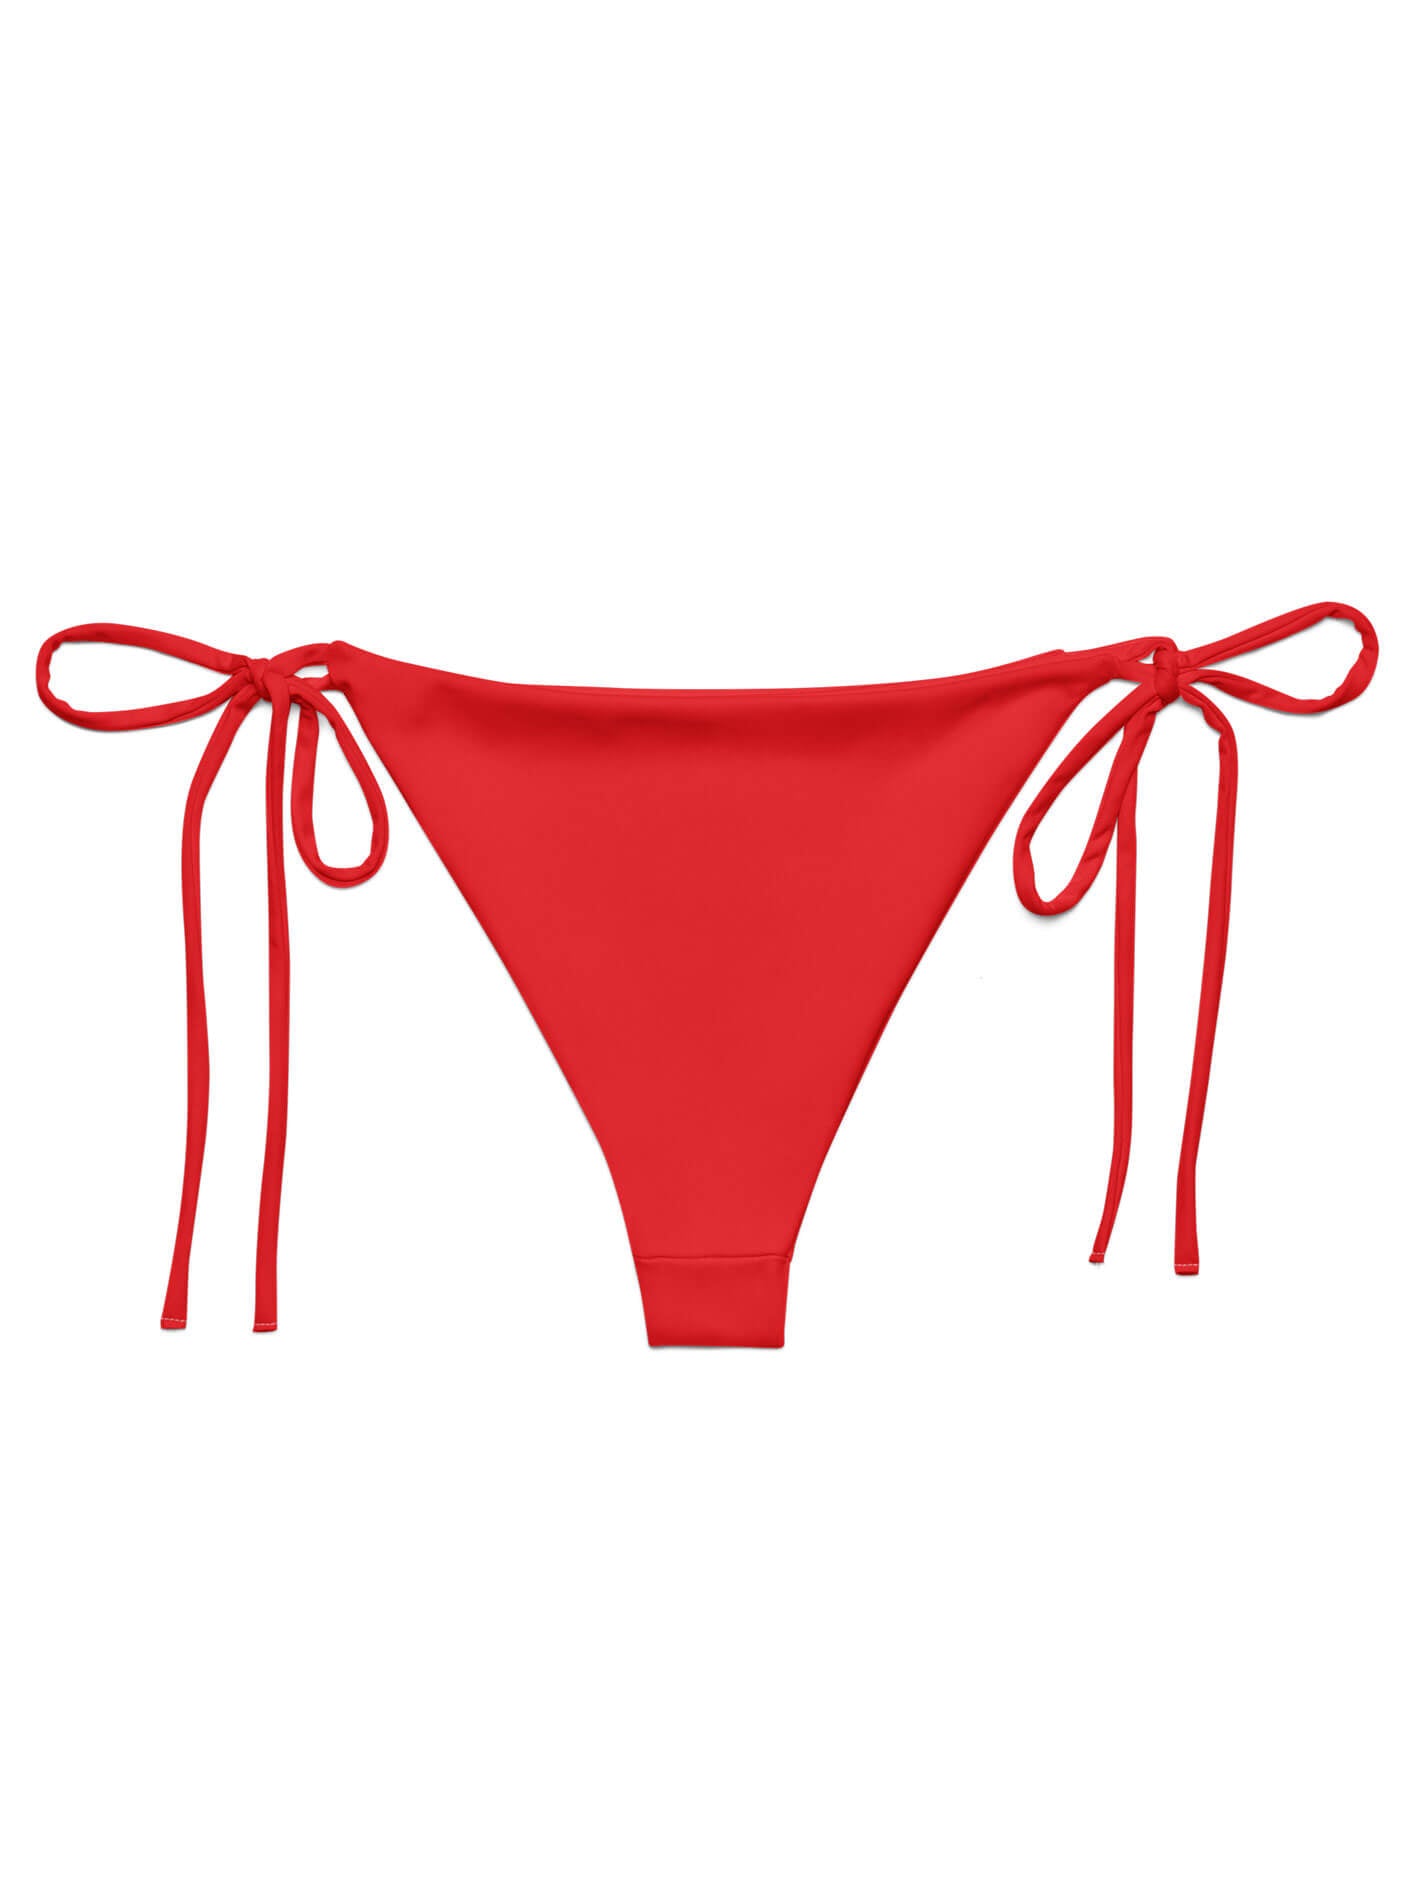 Red plus size bikini bottom.